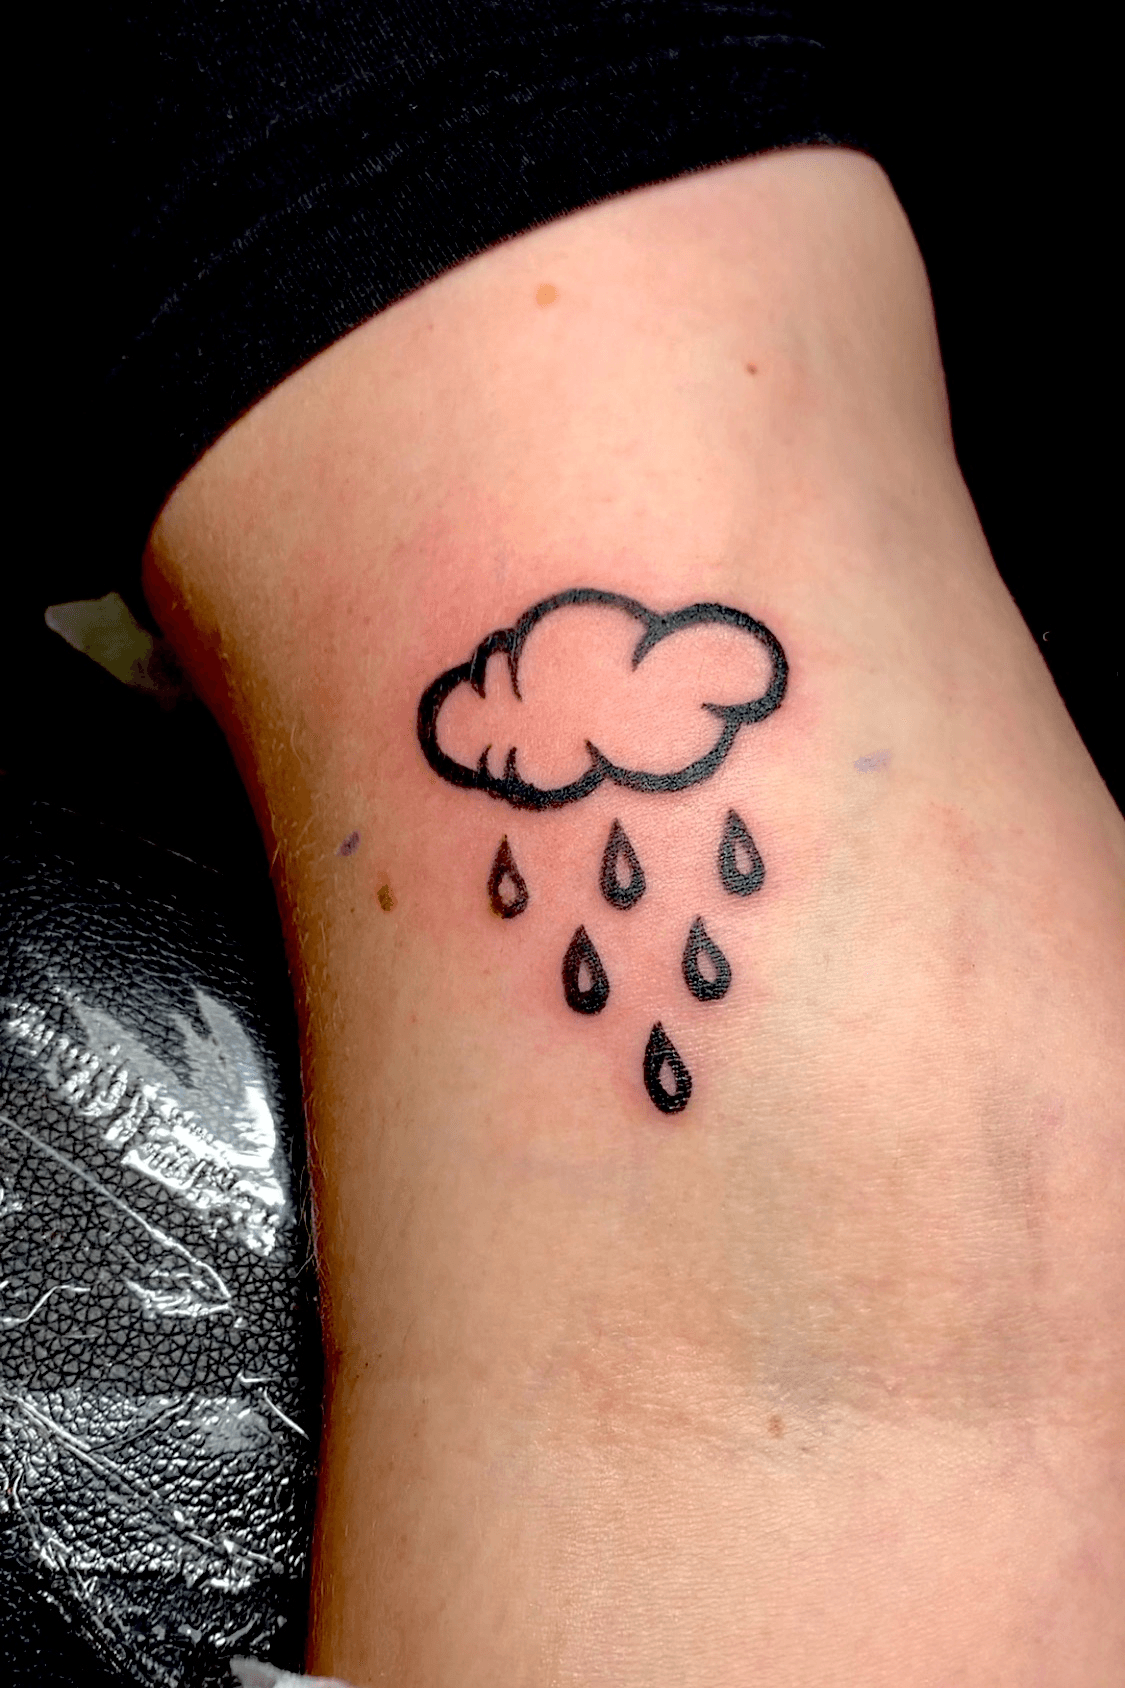 Fine line cloud and rain tattoo on the inner arm